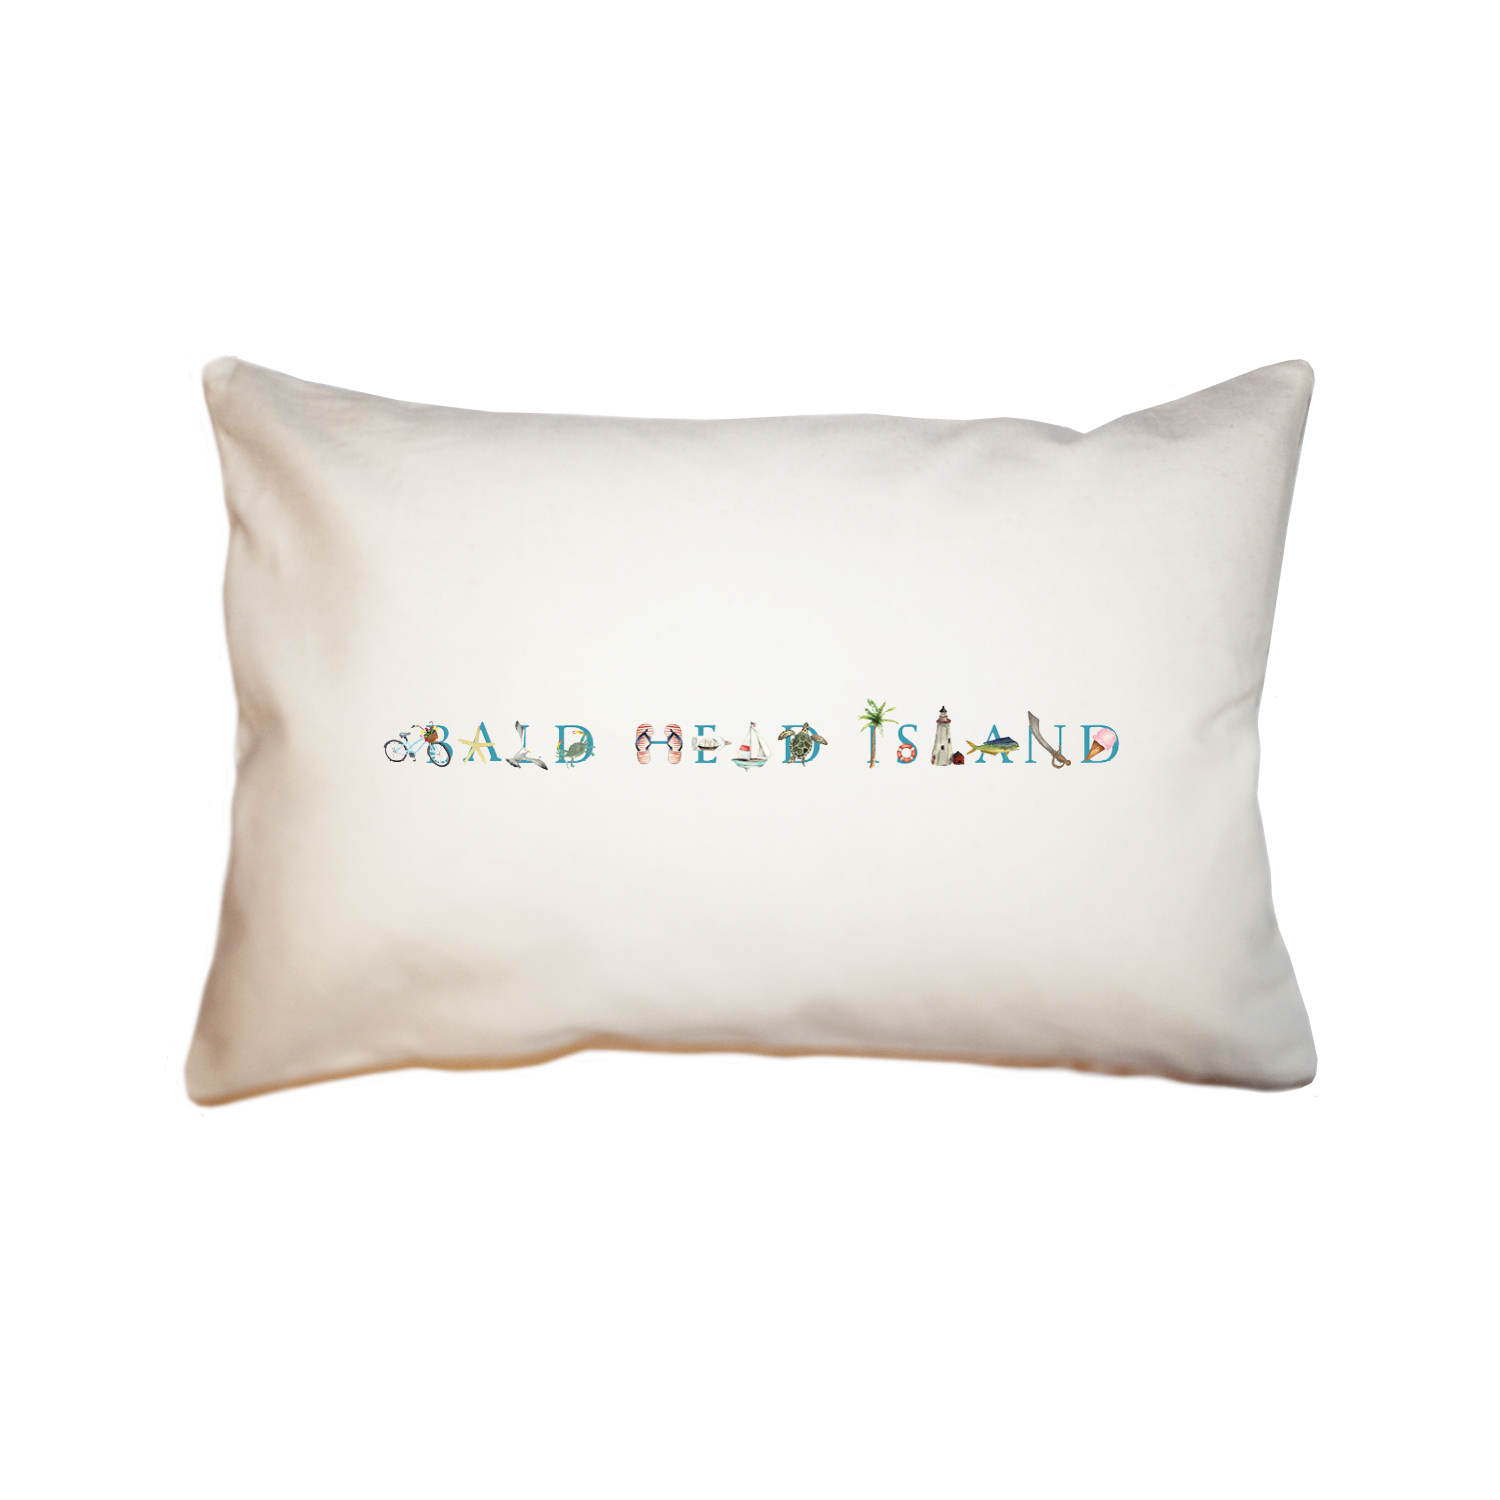 Bald Head Island large rectangle pillow